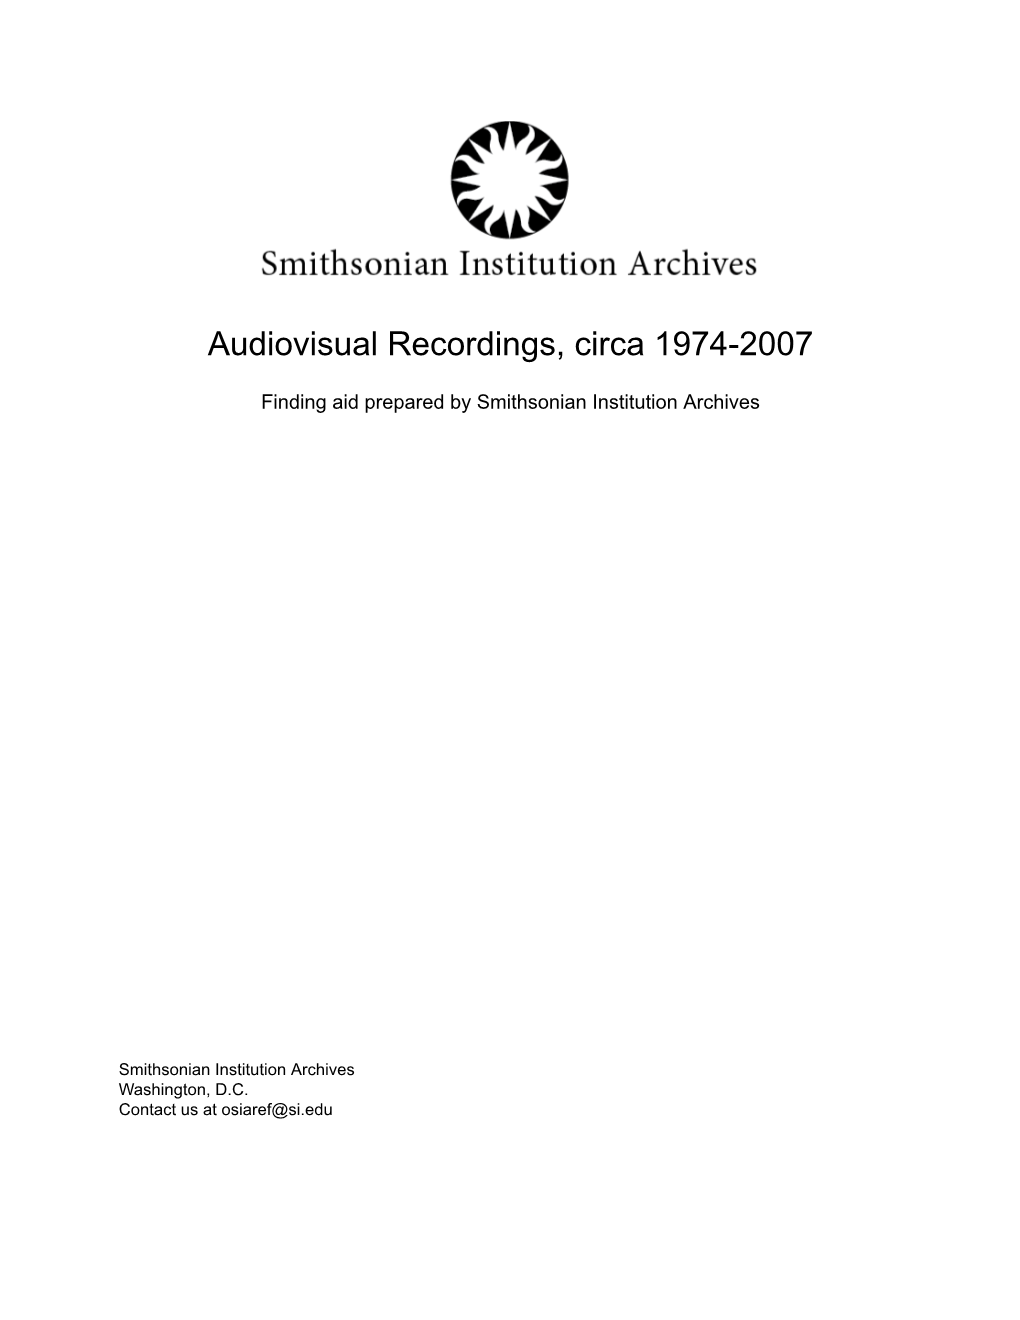 Audiovisual Recordings, Circa 1974-2007